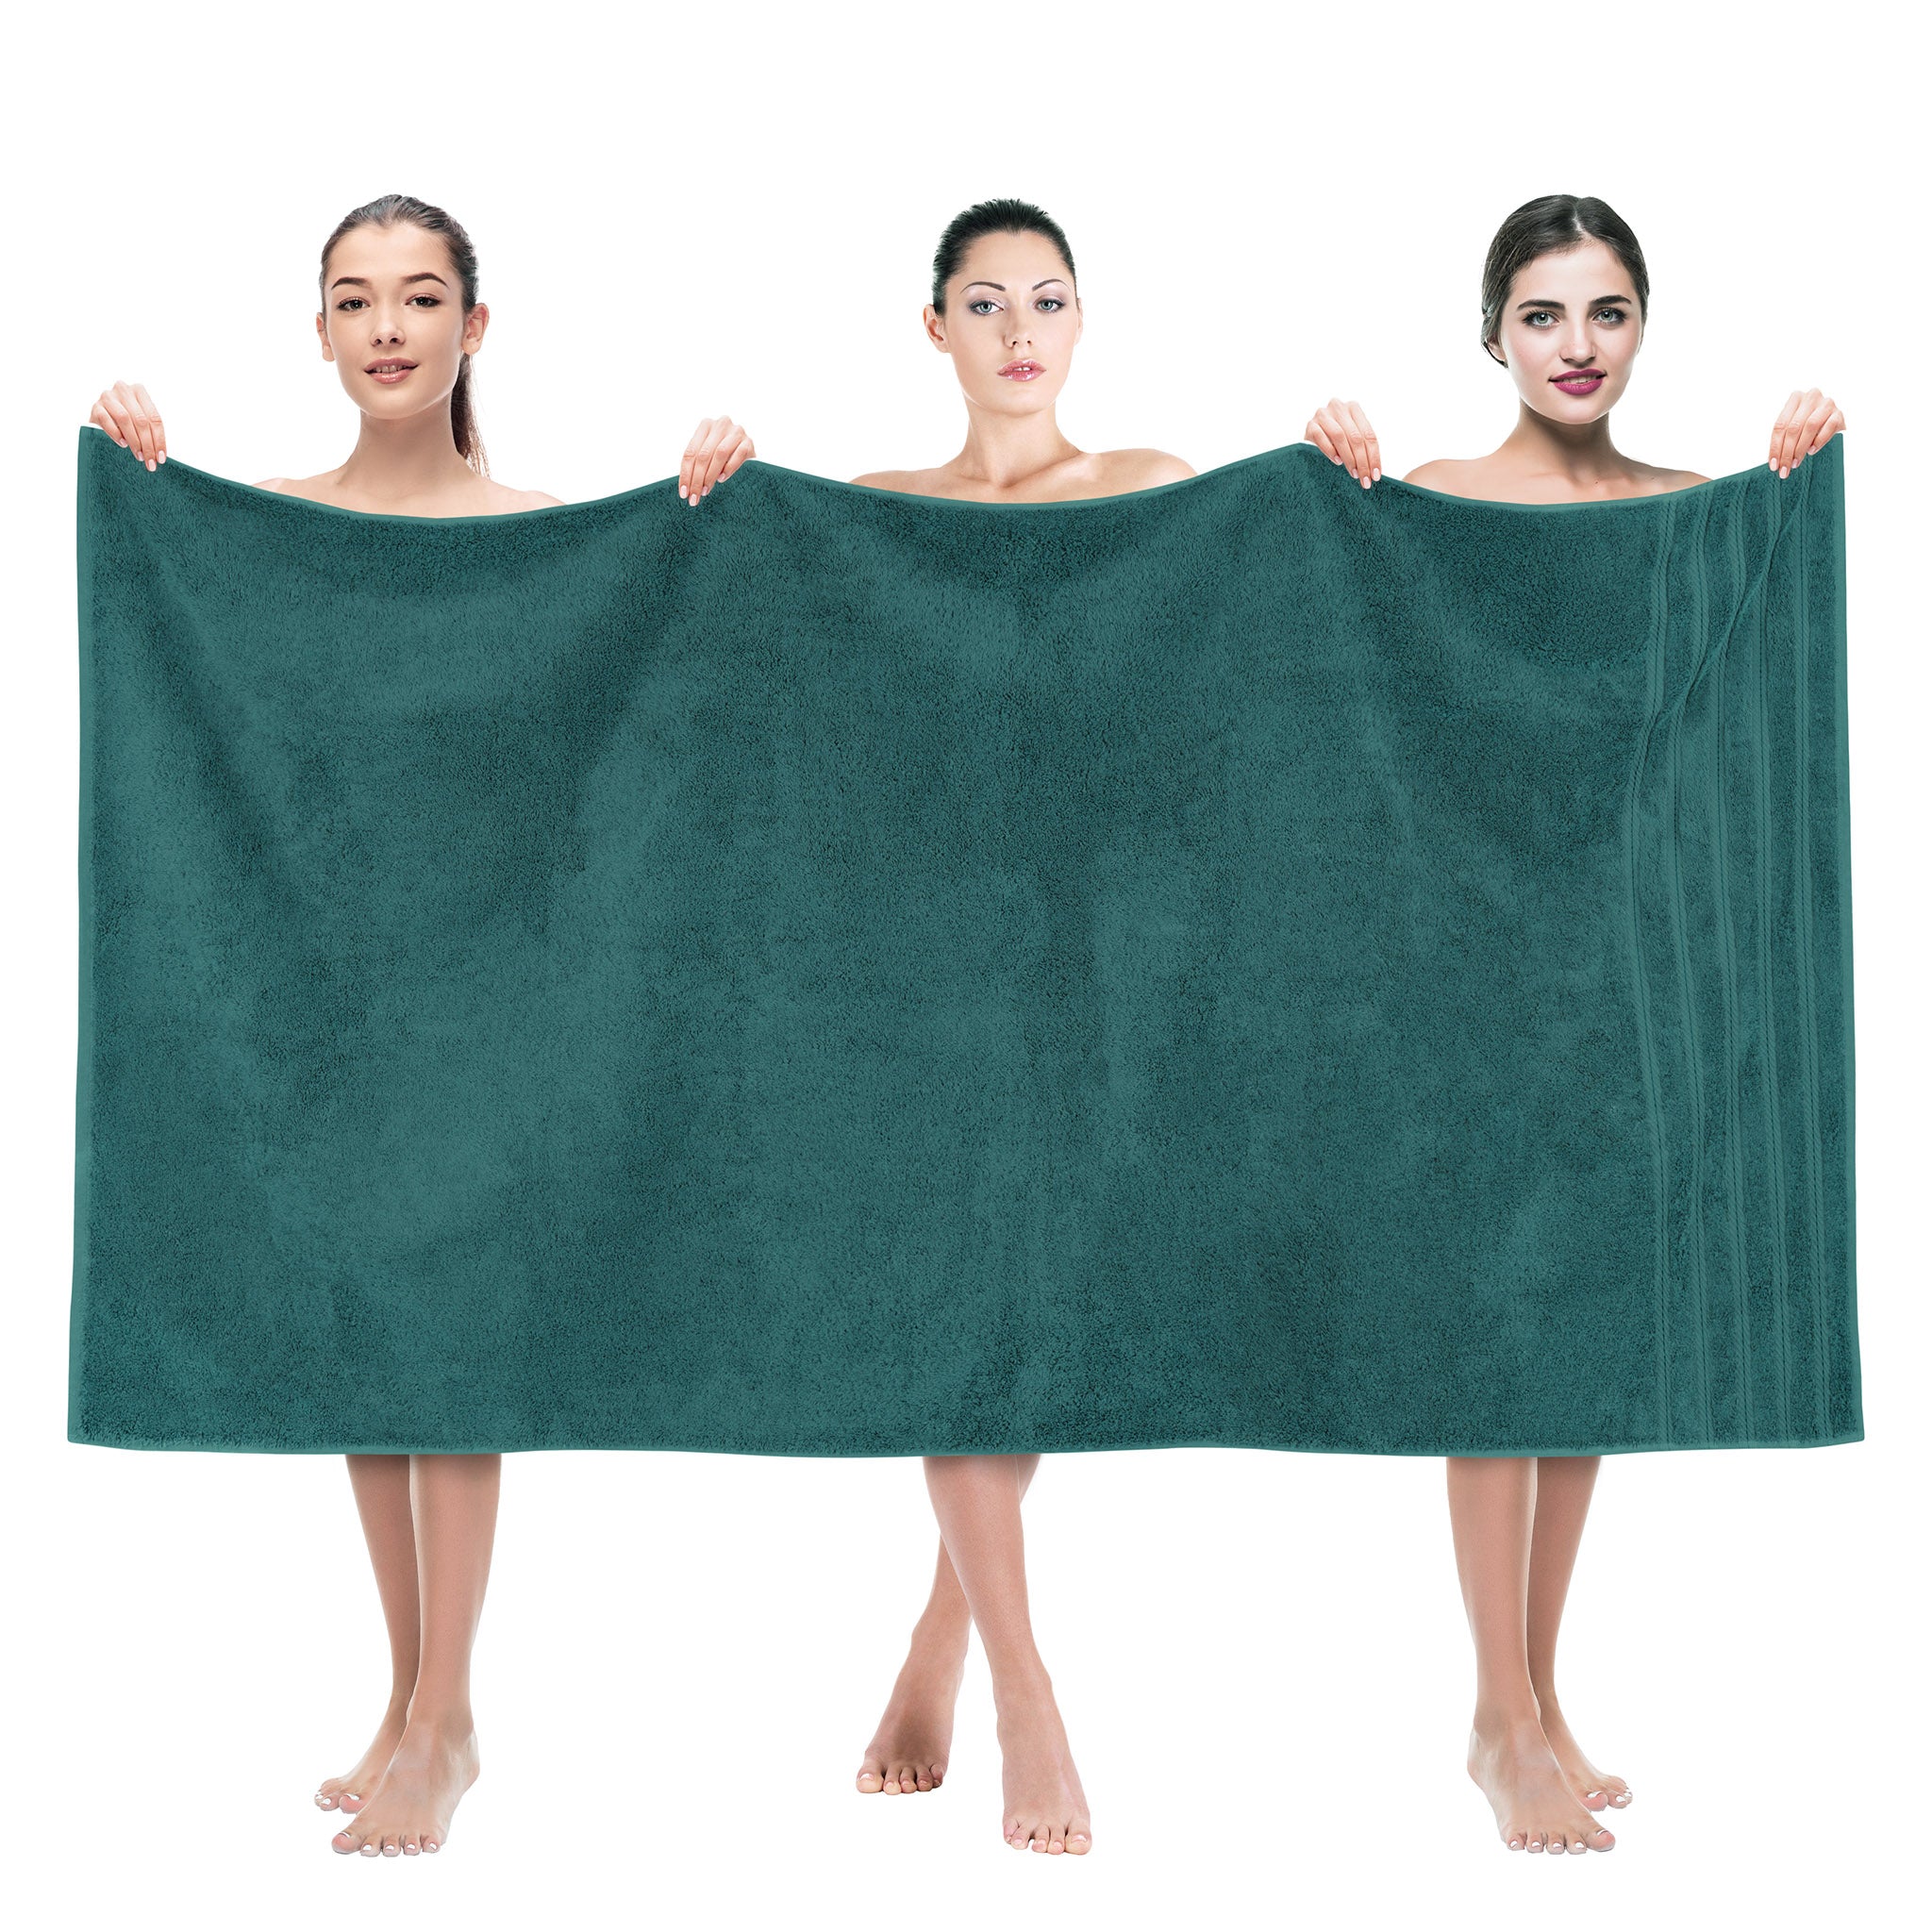 American Soft Linen Bath Sheet 40x80 inch 100% Cotton Extra Large Oversized Bath Towel Sheet - Chocolate Brown, Size: Oversized Bath Sheet 40x80